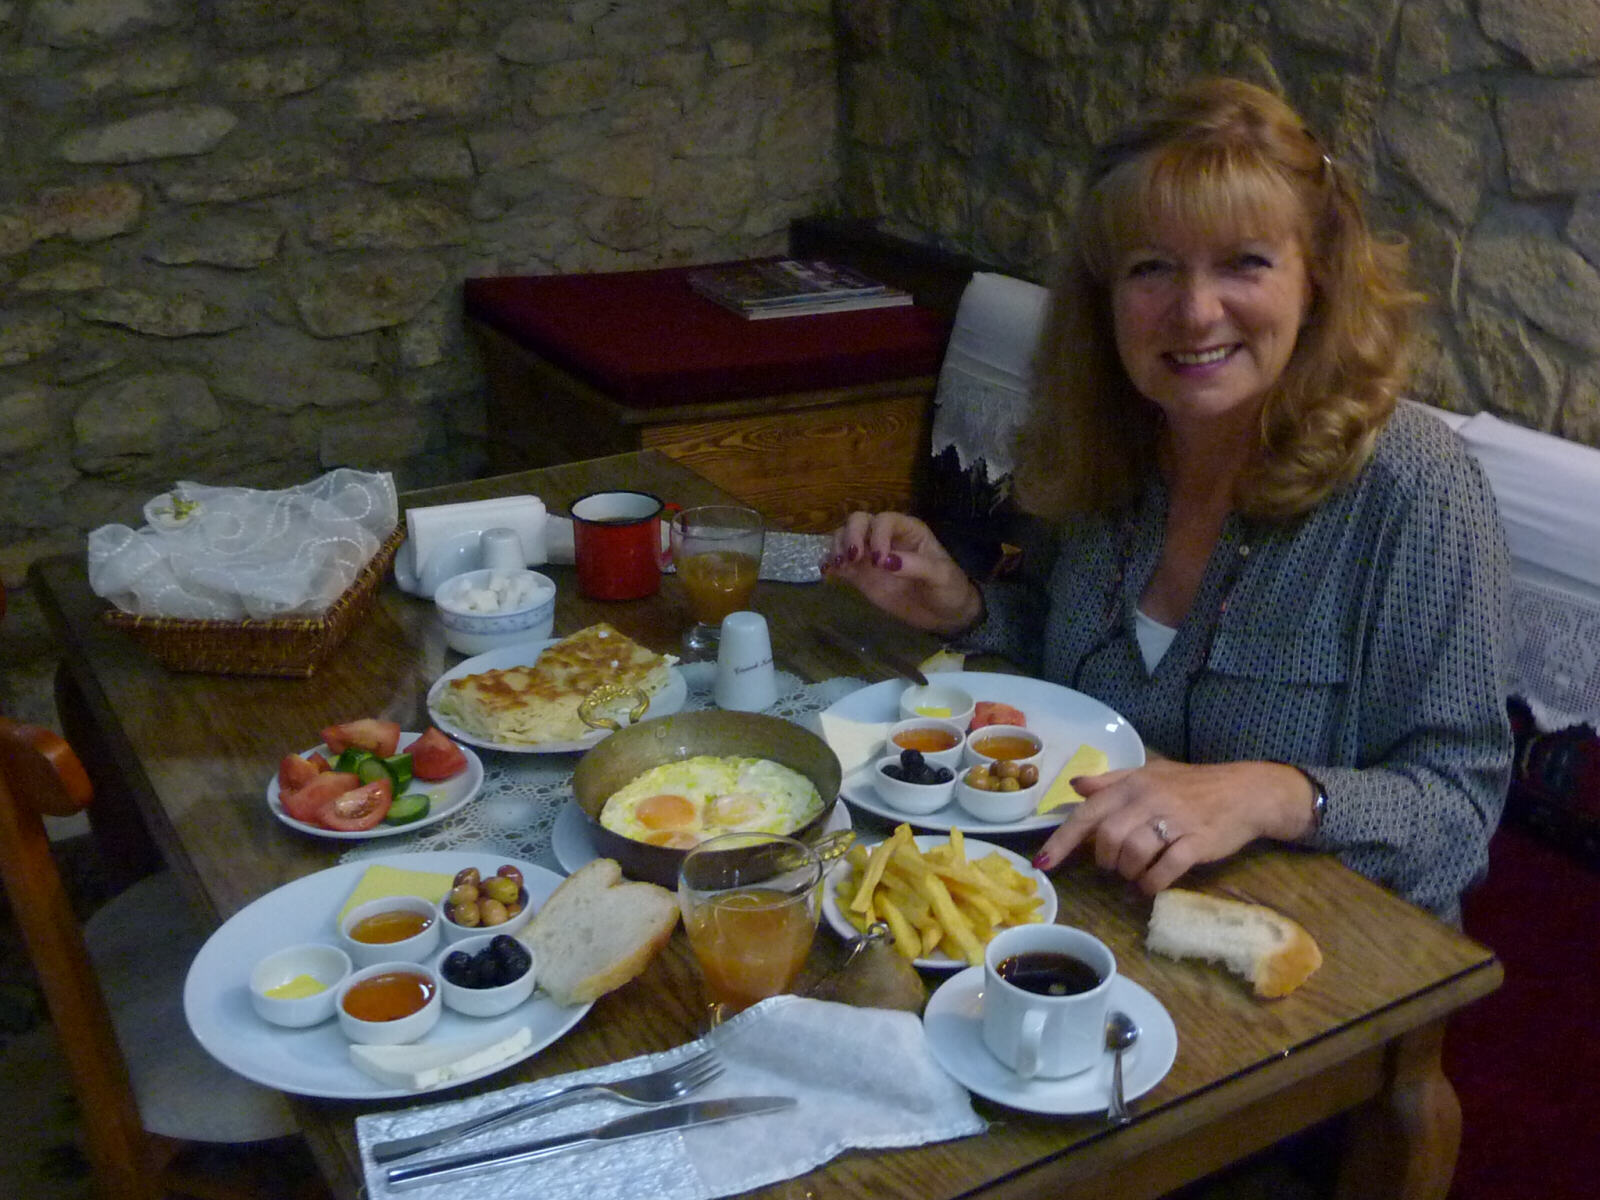 Breakfast at the Cesmeli Konak hotel in Safranbolu, Turkey